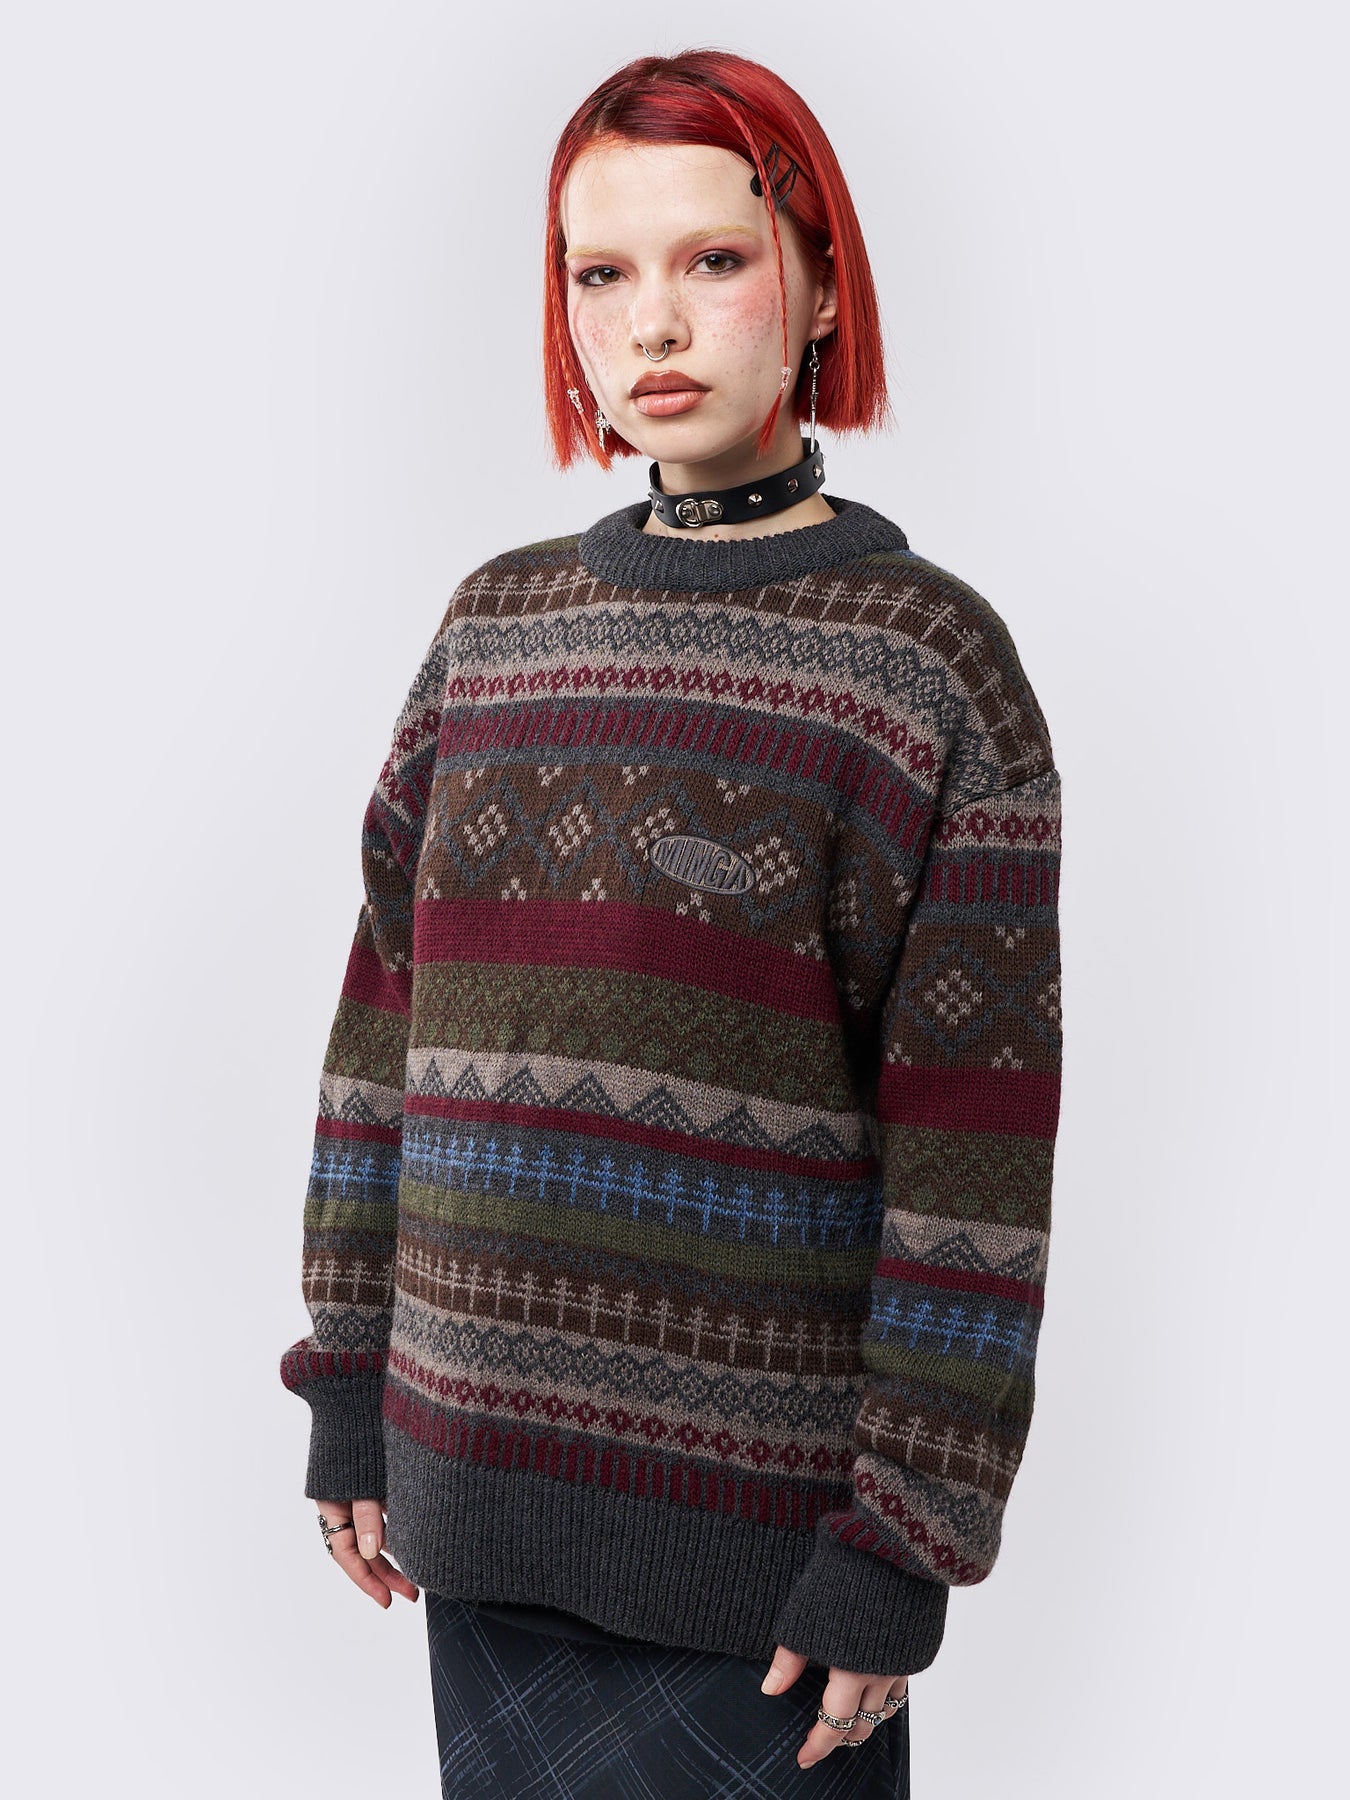 Oversized Jacquard Knit Sweater in Multicolored Geometric Stripes ...